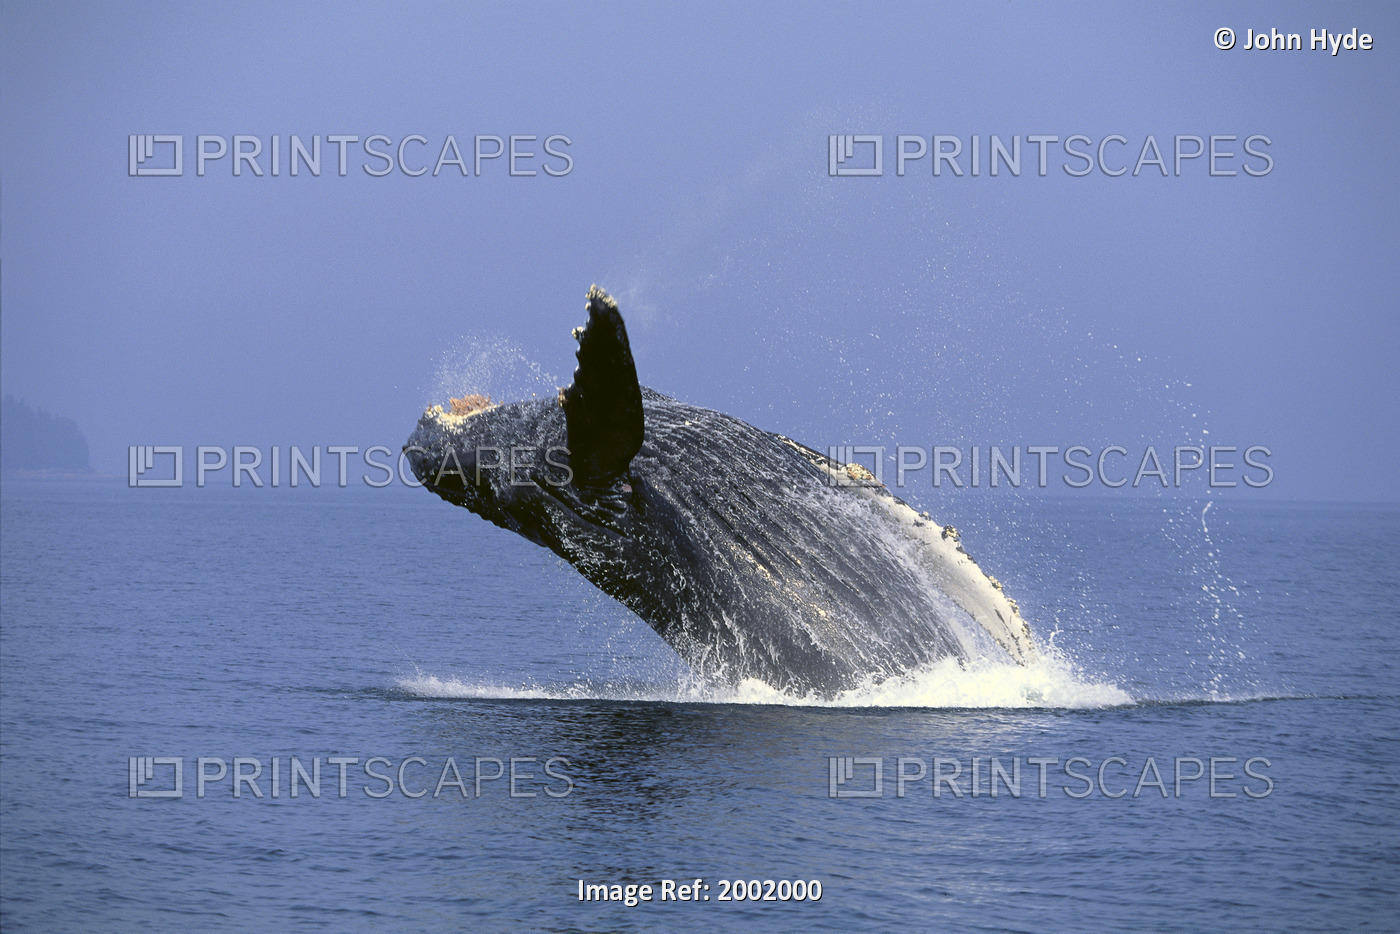 Alaska, Frederick Sound, Humpback Whale (Megaptera Novaeangliae) Breaching